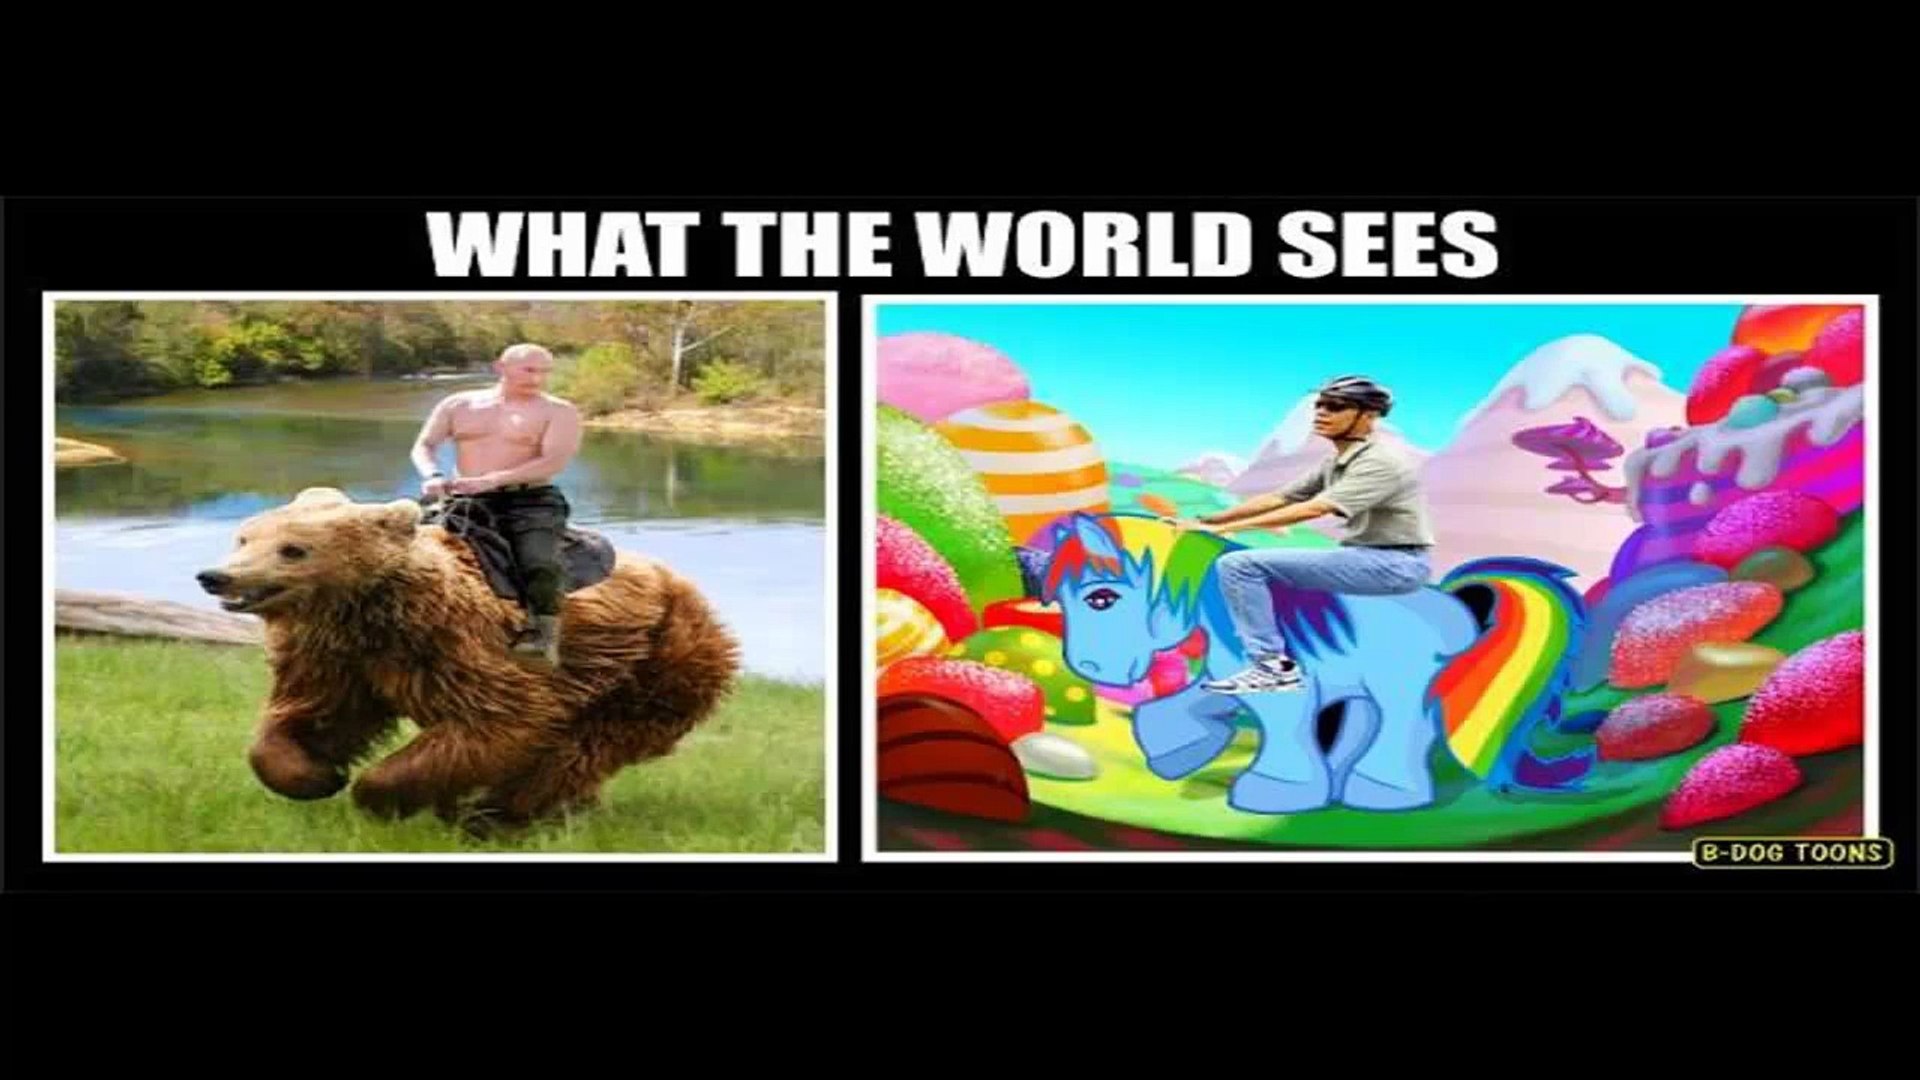 Meme wars: Putin vs USA